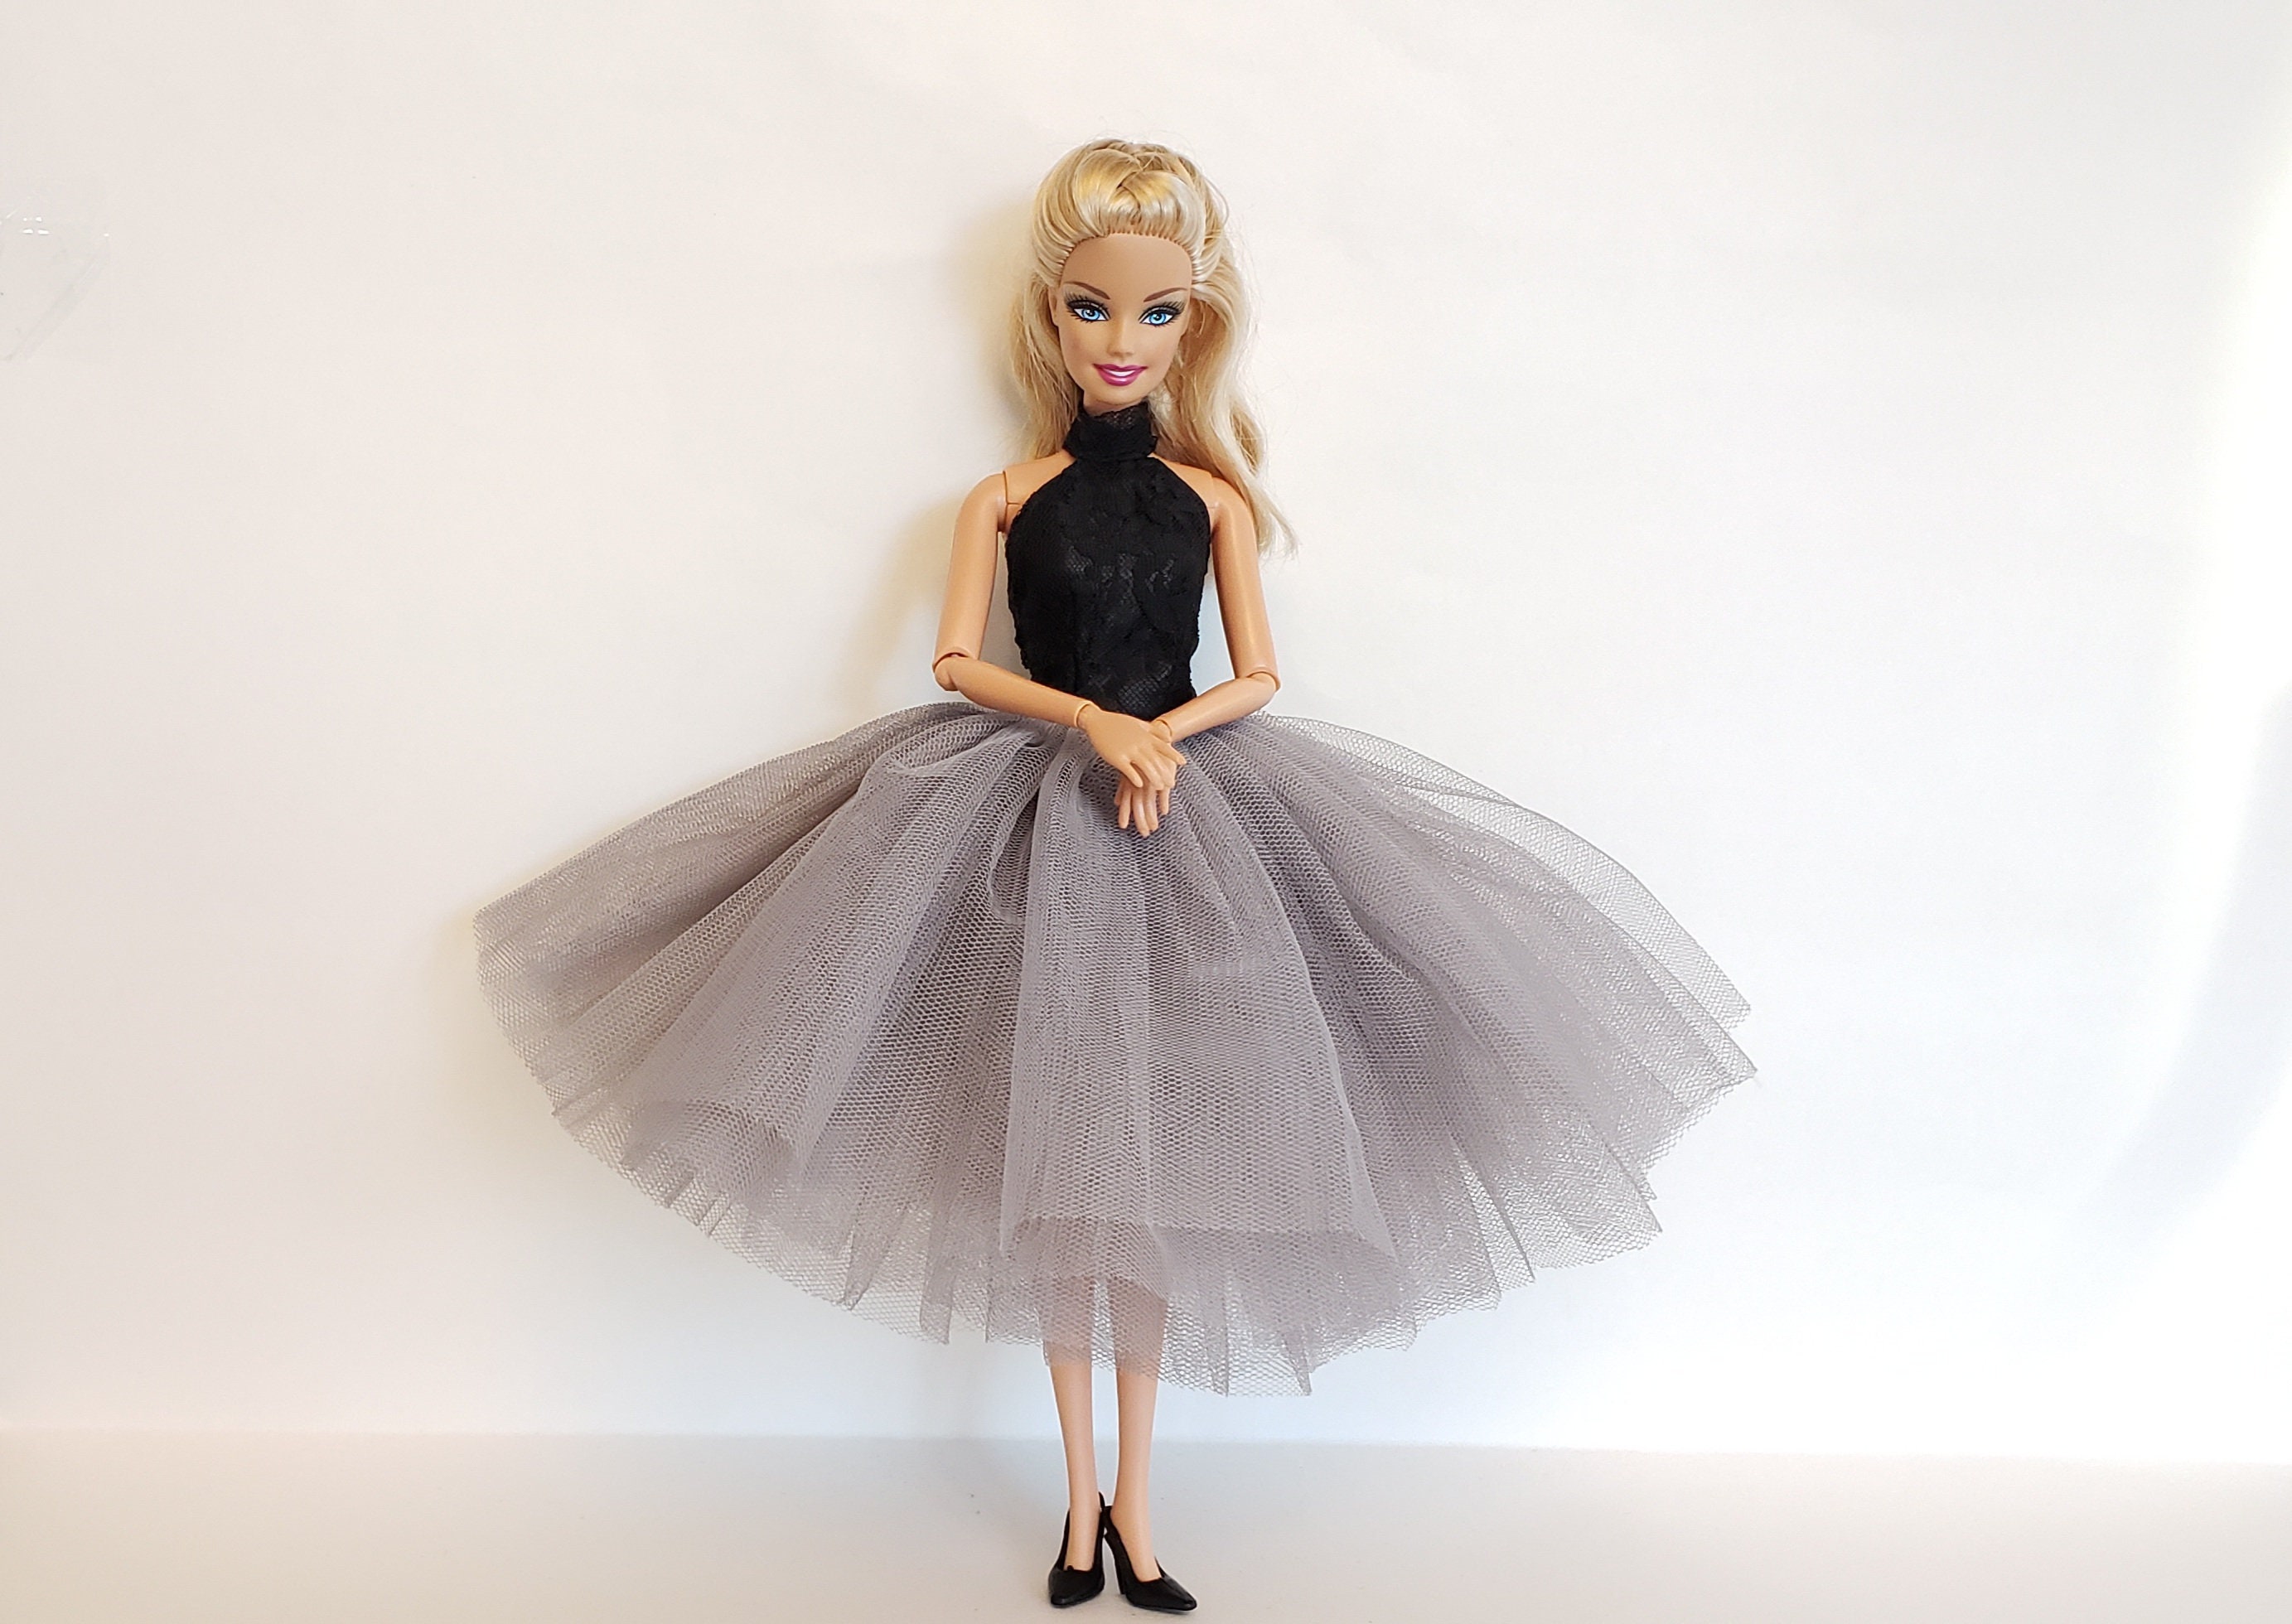 how to make barbie doll dresses